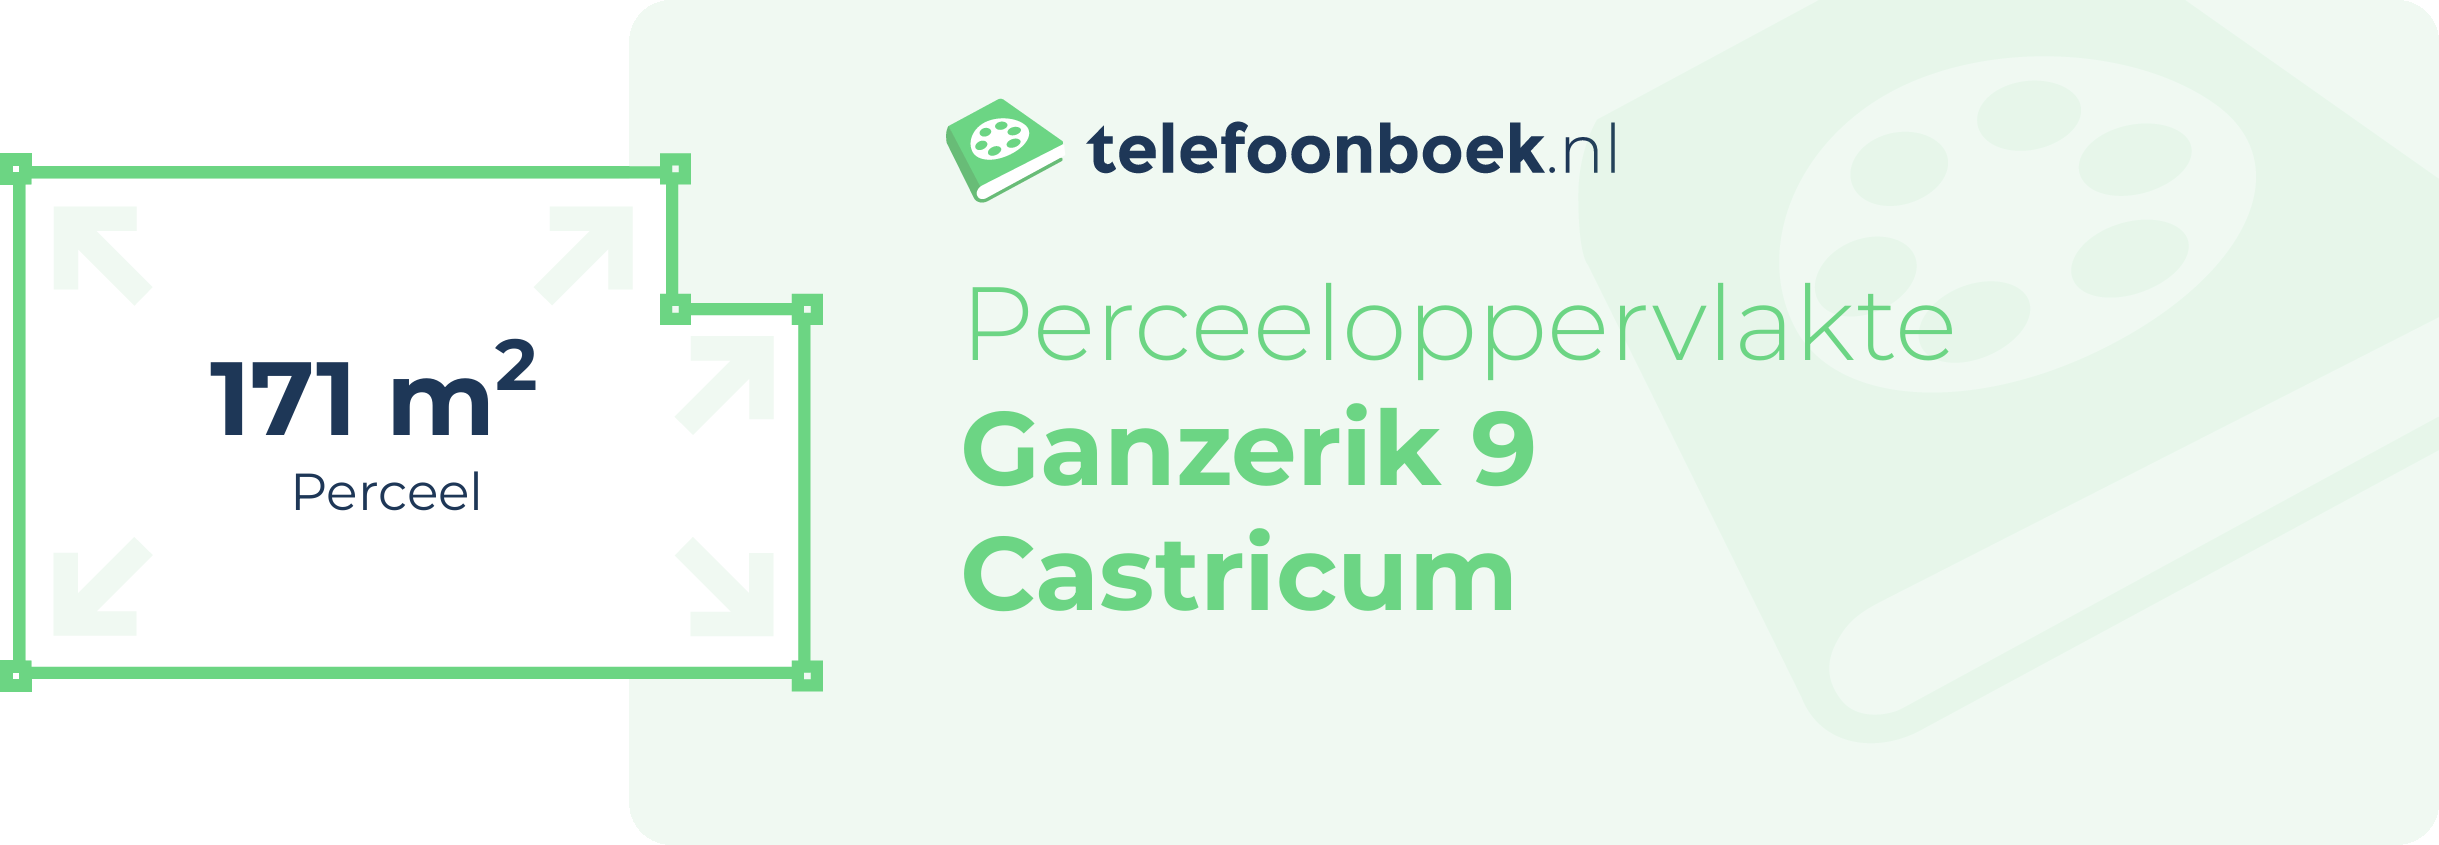 Perceeloppervlakte Ganzerik 9 Castricum